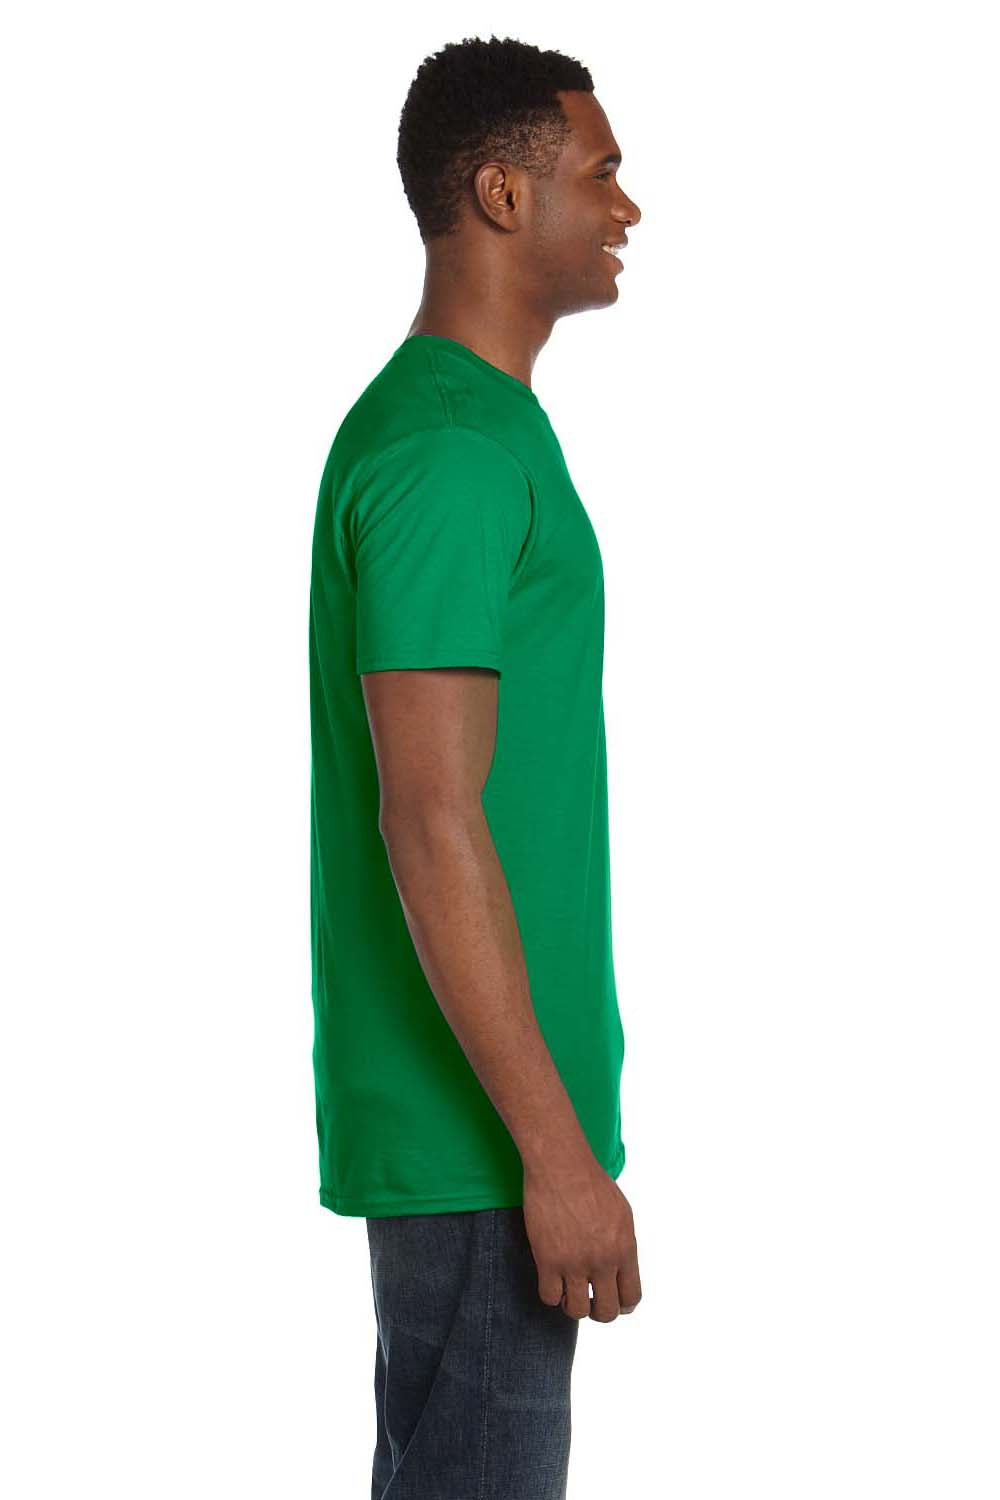 Hanes 4980 Mens Nano-T Short Sleeve Crewneck T-Shirt Kelly Green Side